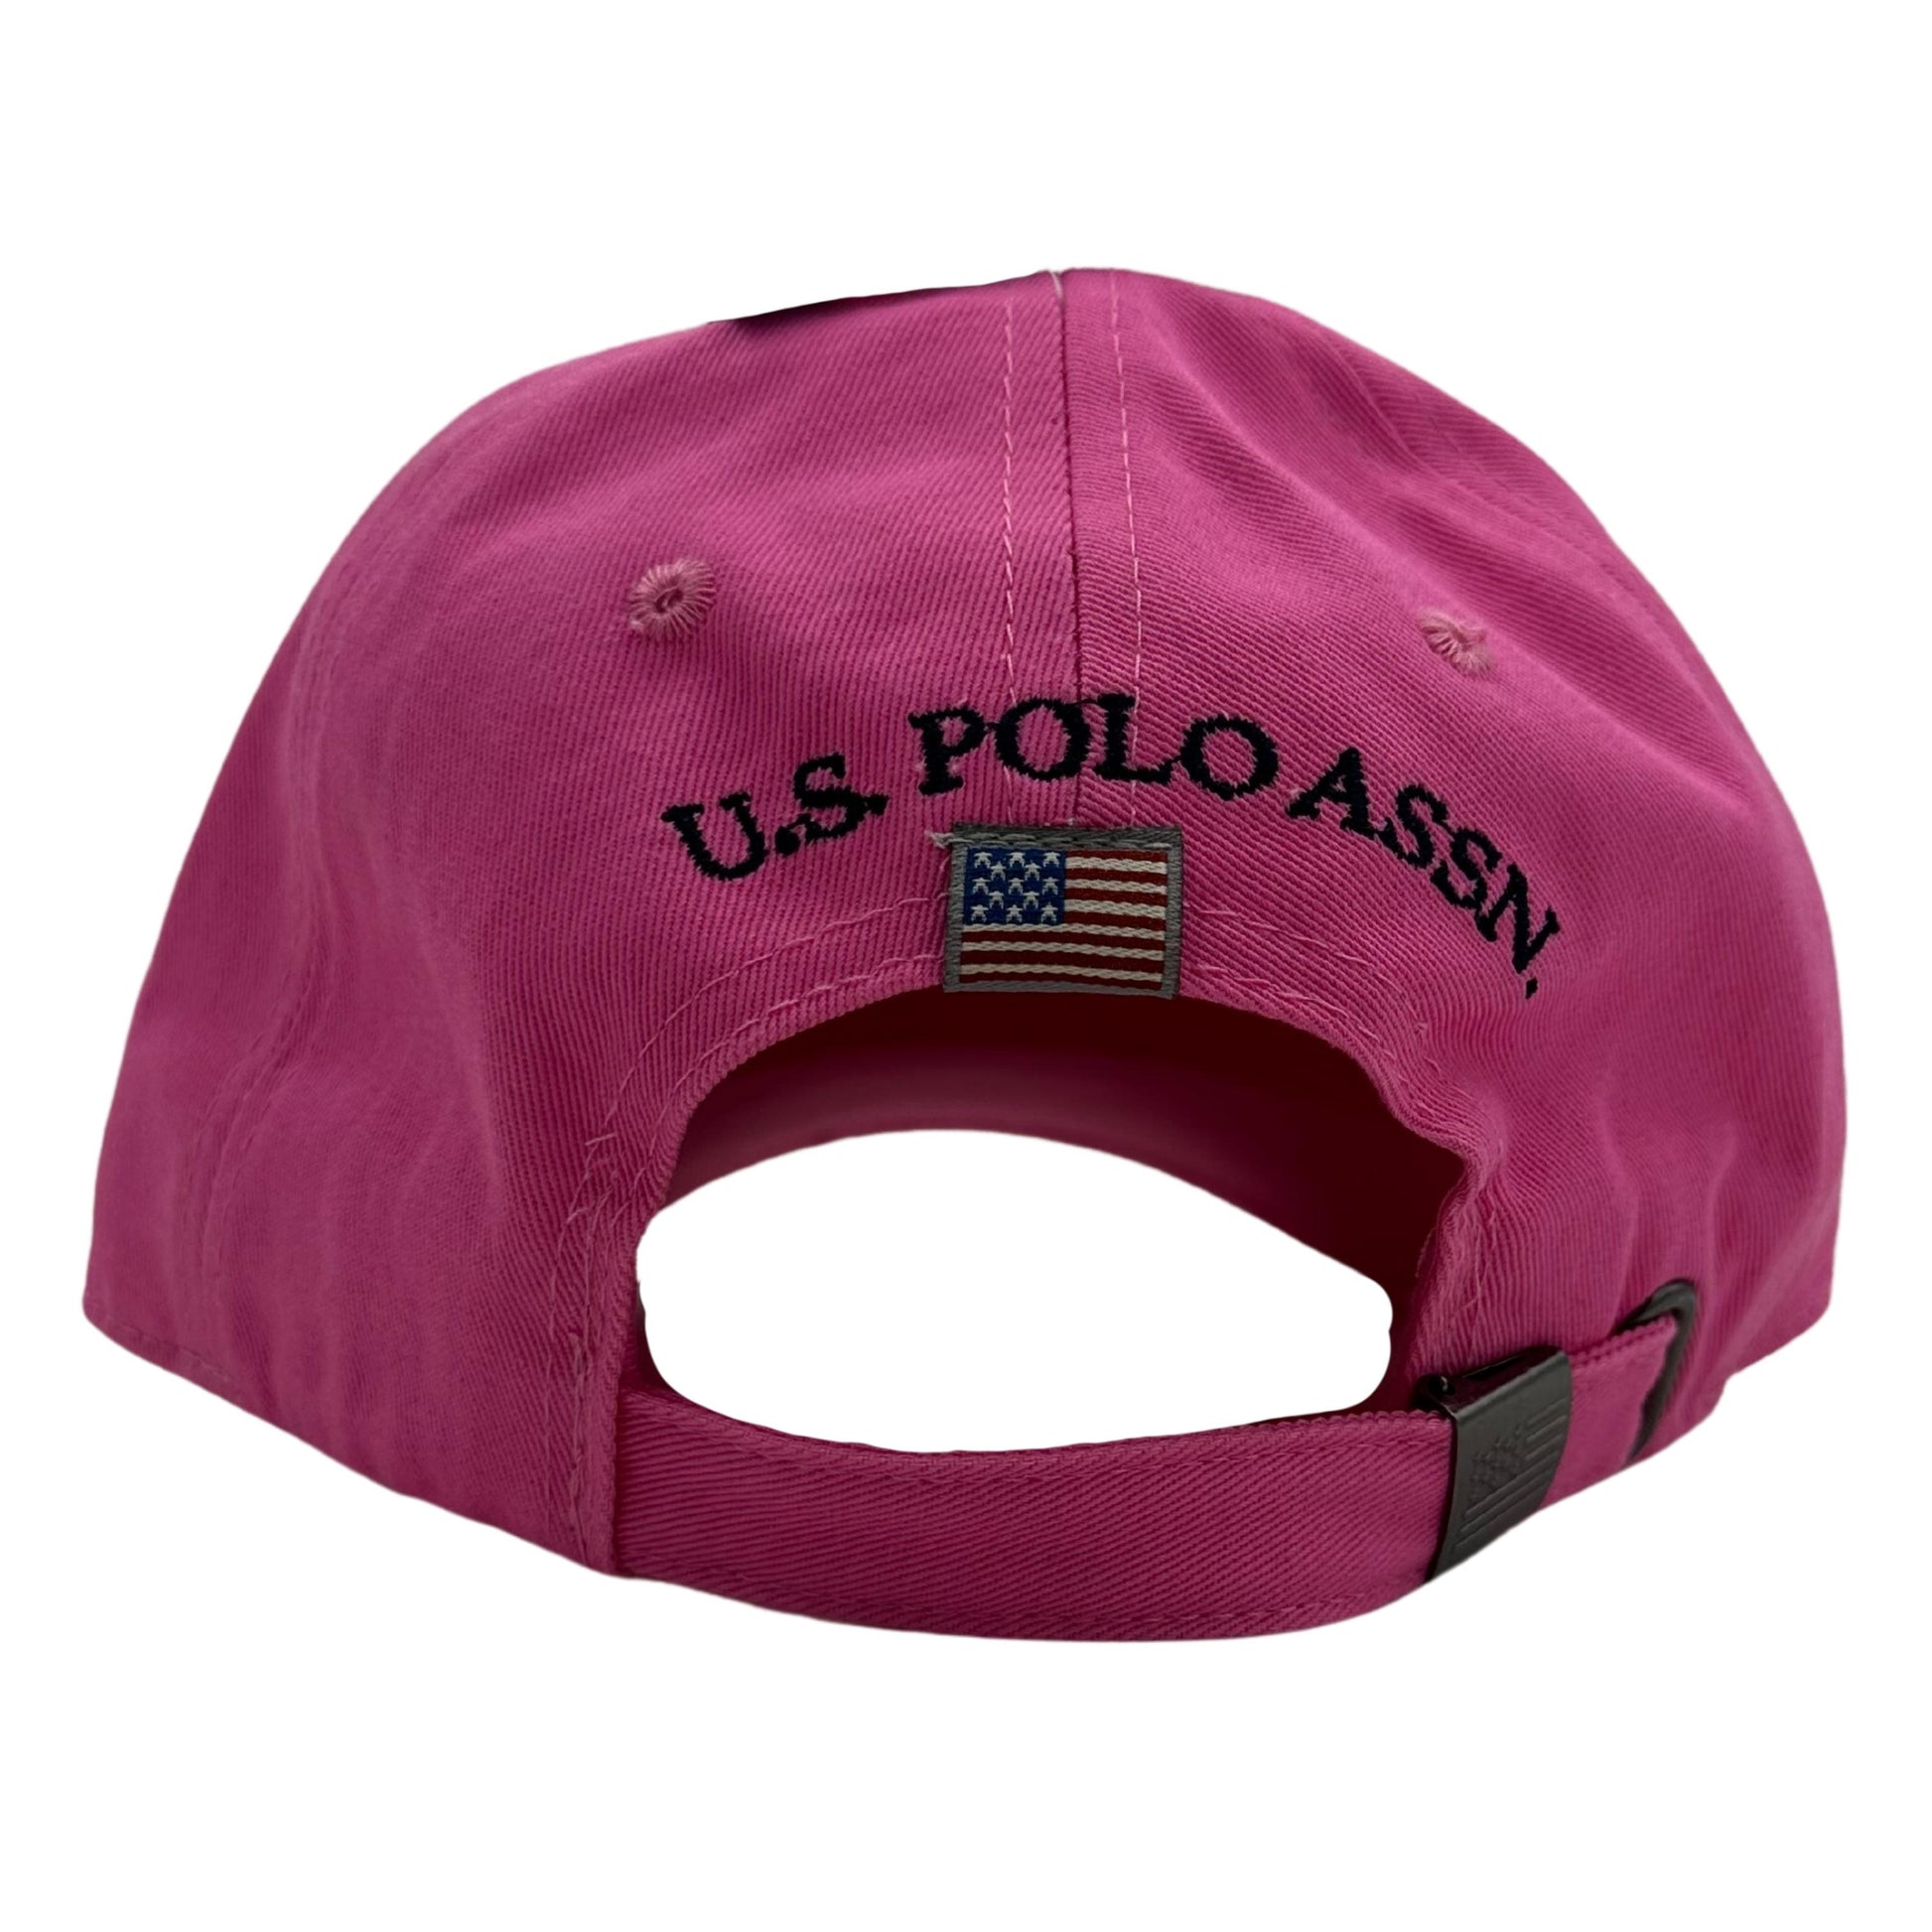 U.S. Polo Assn. Pink Unisex Adjustable Pink Hat - 888783737166